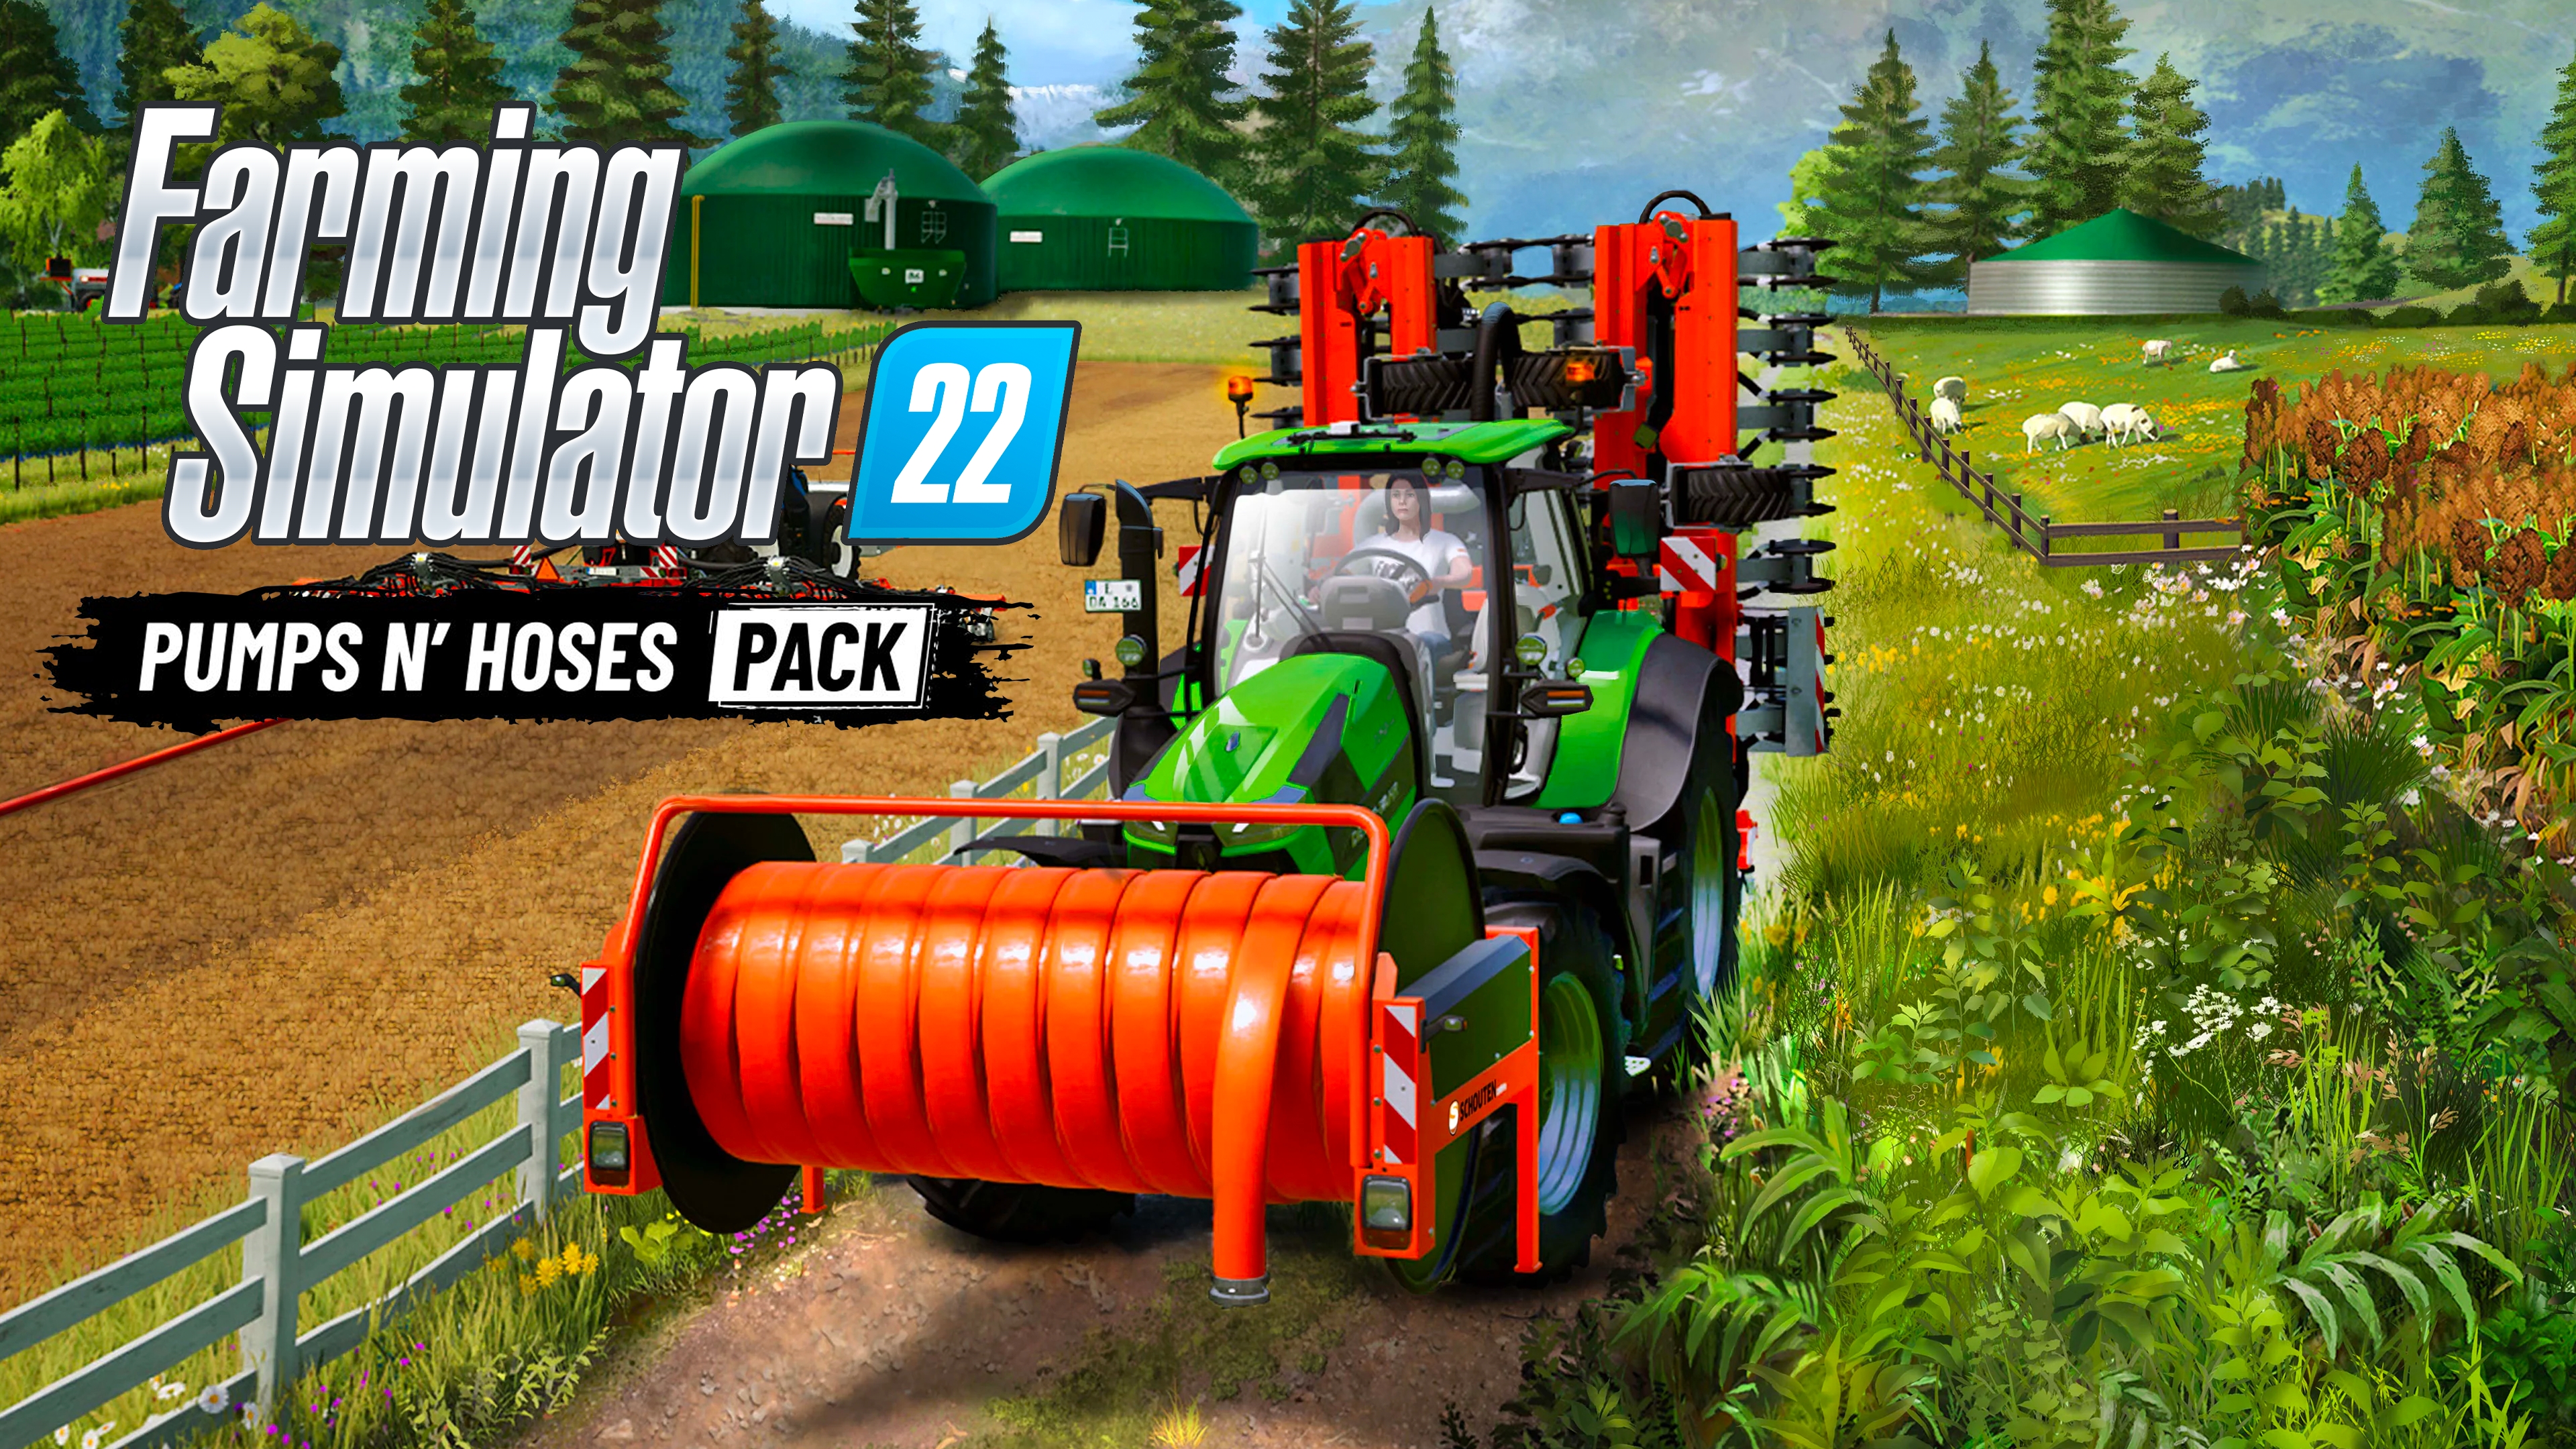 Acquista Farming Simulator 22 - Pumps n' Hoses Pack Steam